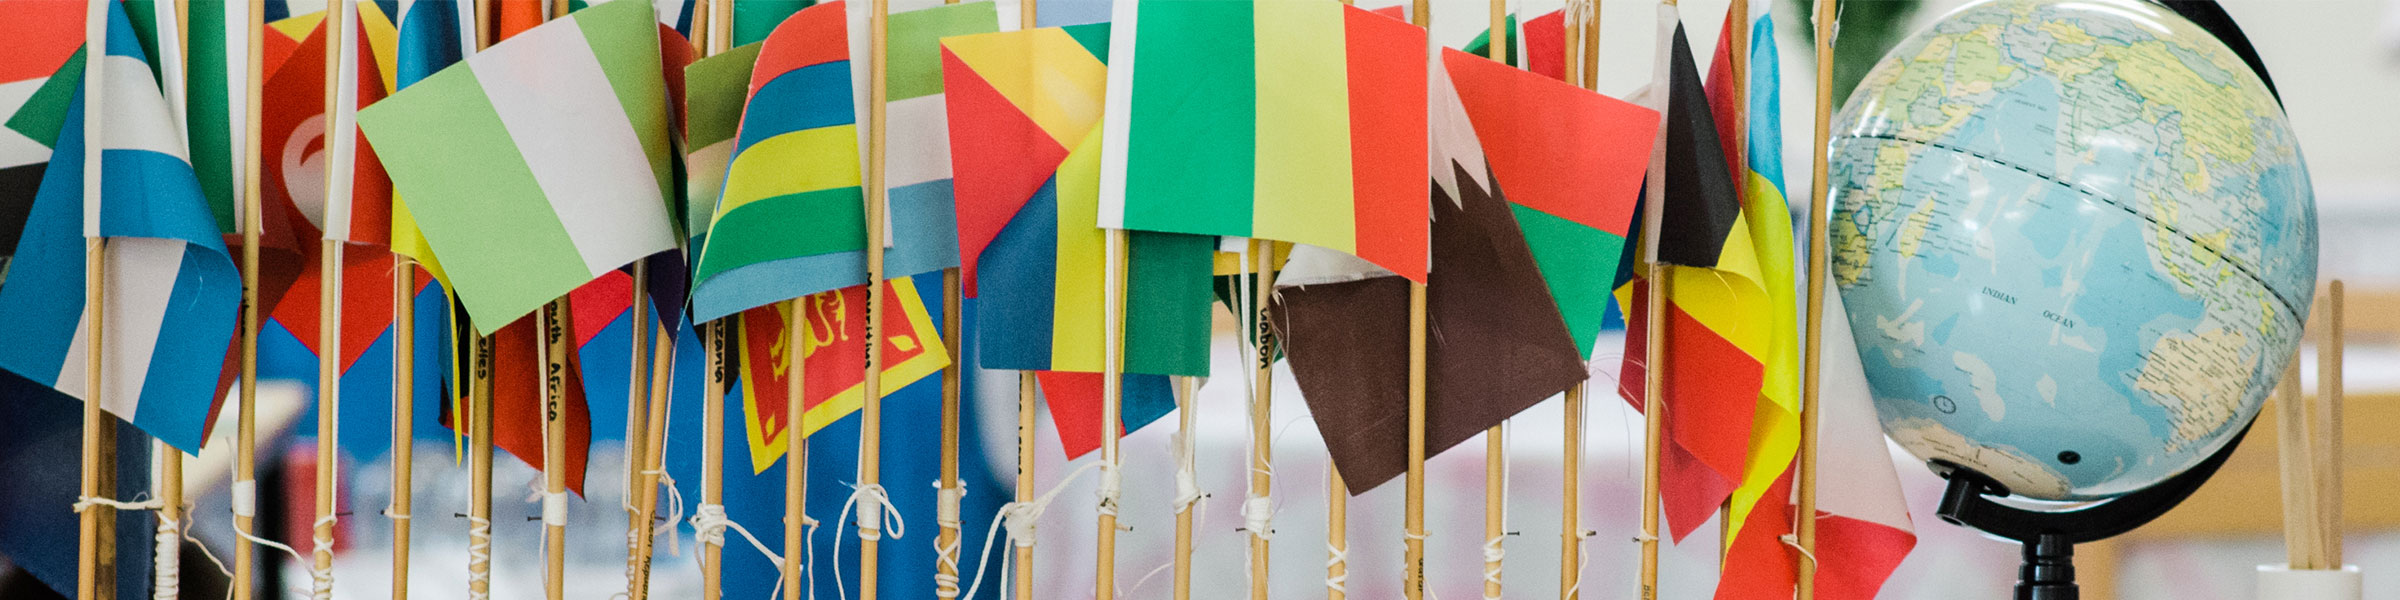 Montessori materials flags and globe